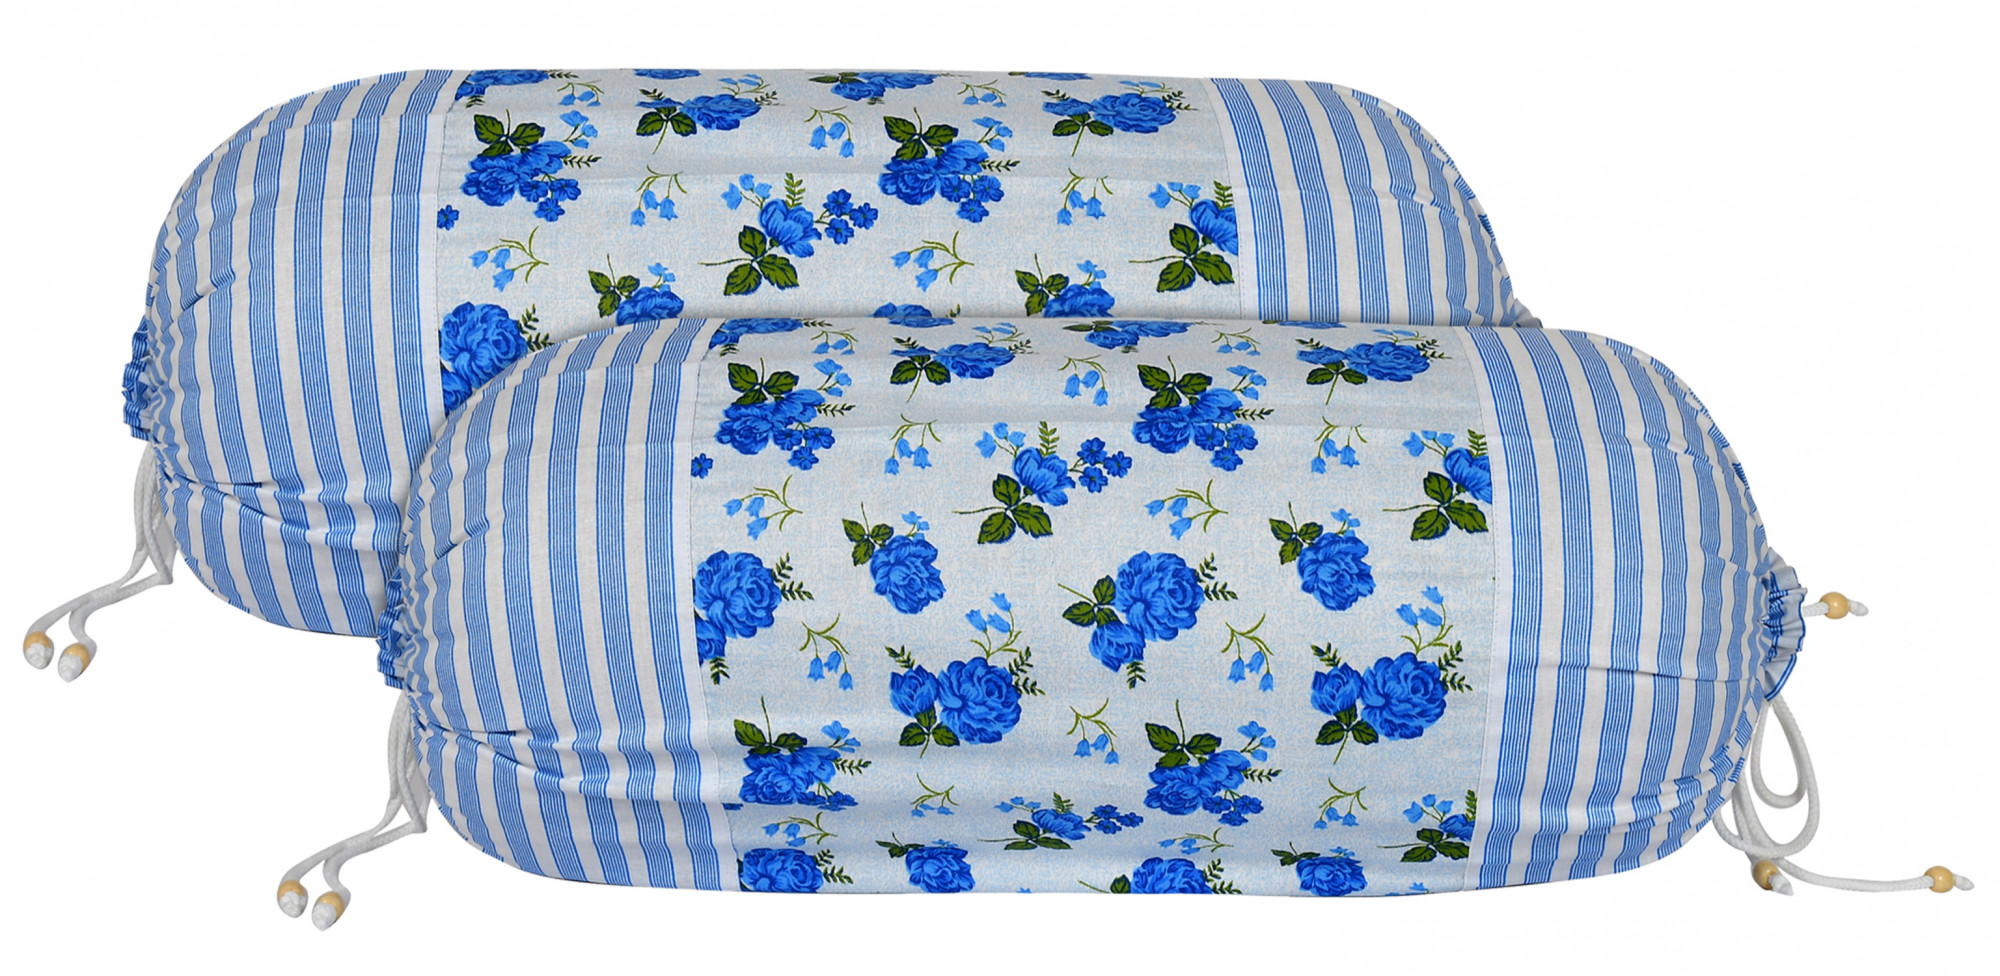 Kuber Industries Flower Design Premium Cotton Bolster Covers, 16 x 30 inch,(Blue)